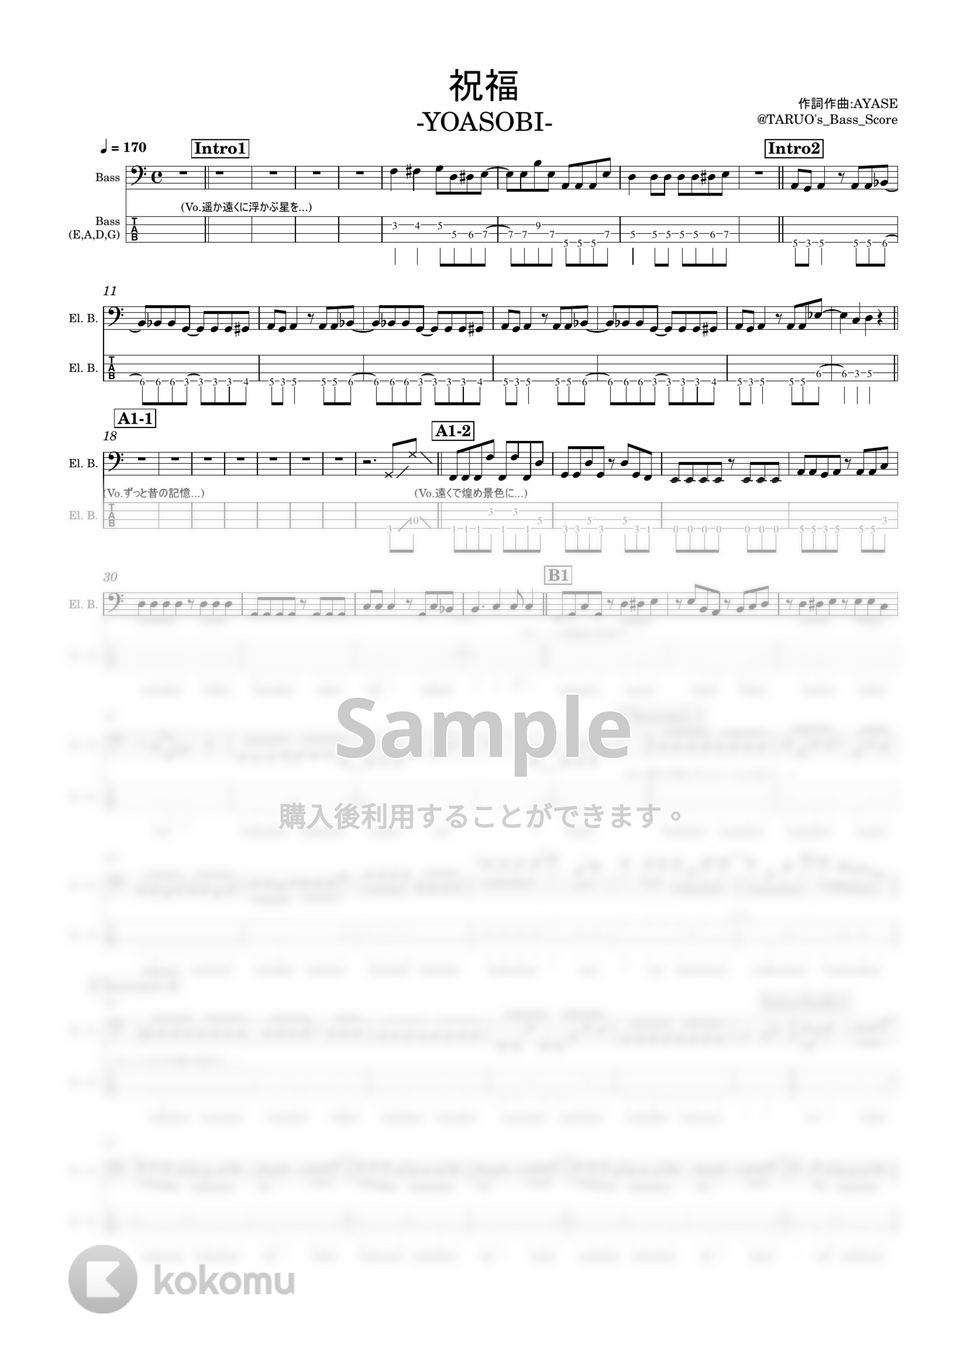 YOASOBI - 祝福(4弦Ver.) (ベース/TAB/YOASOBI/祝福/Bass) by TARUO's_Bass_Score